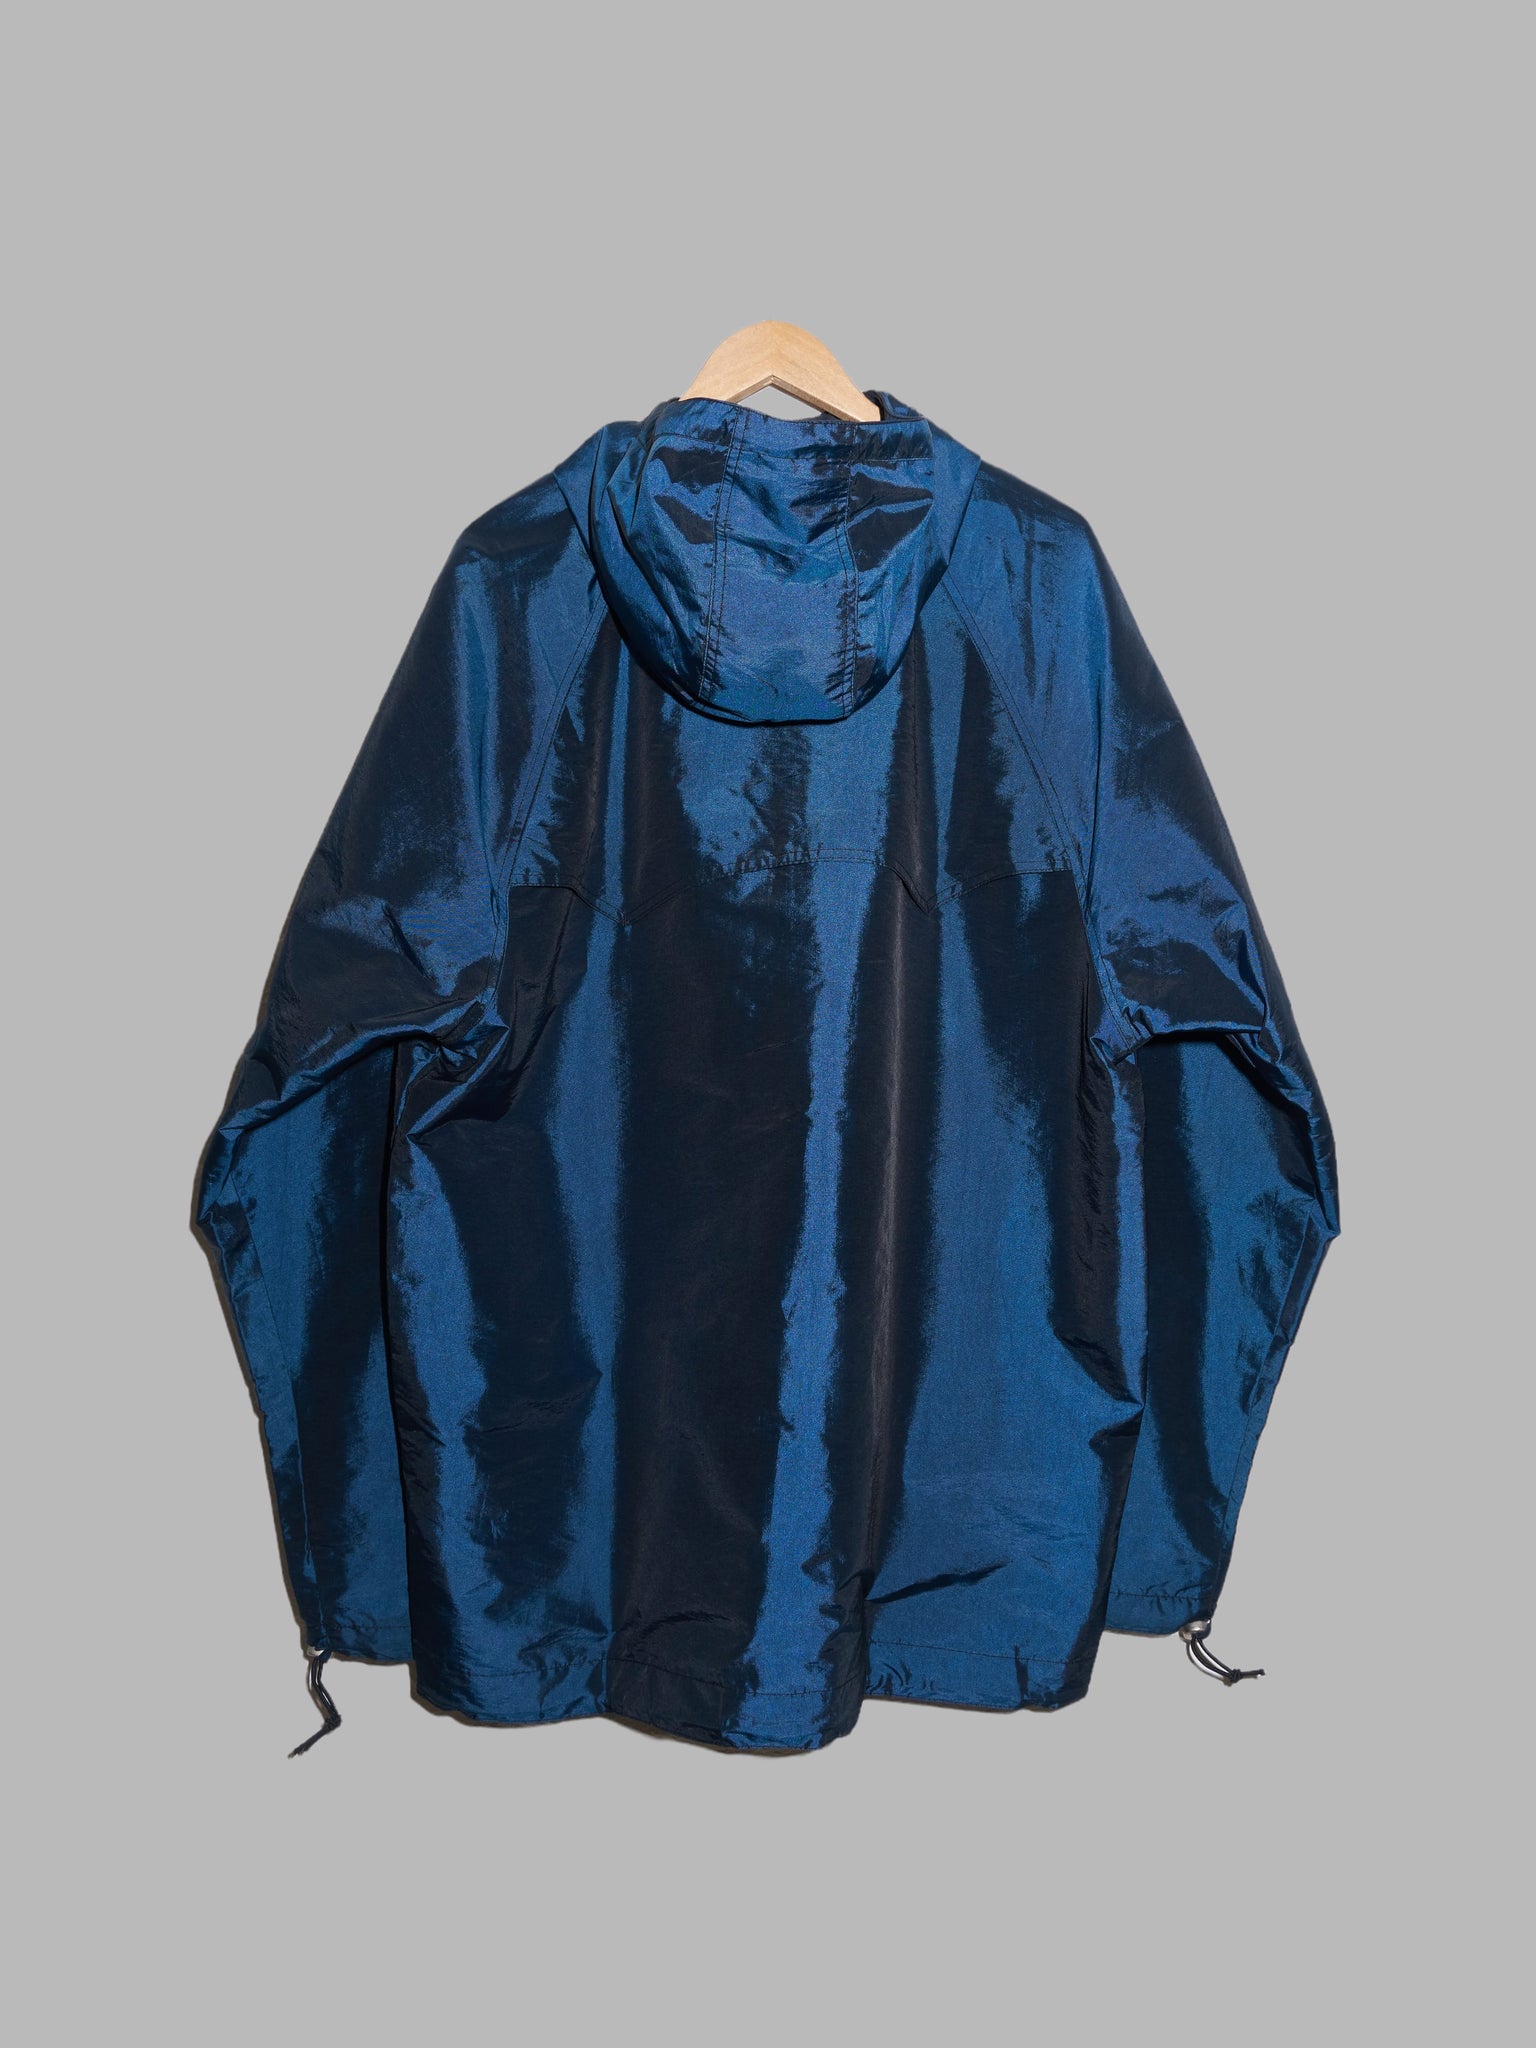 Vintage Sims Snowboards 1990s metallic blue nylon hooded ski jacket - L